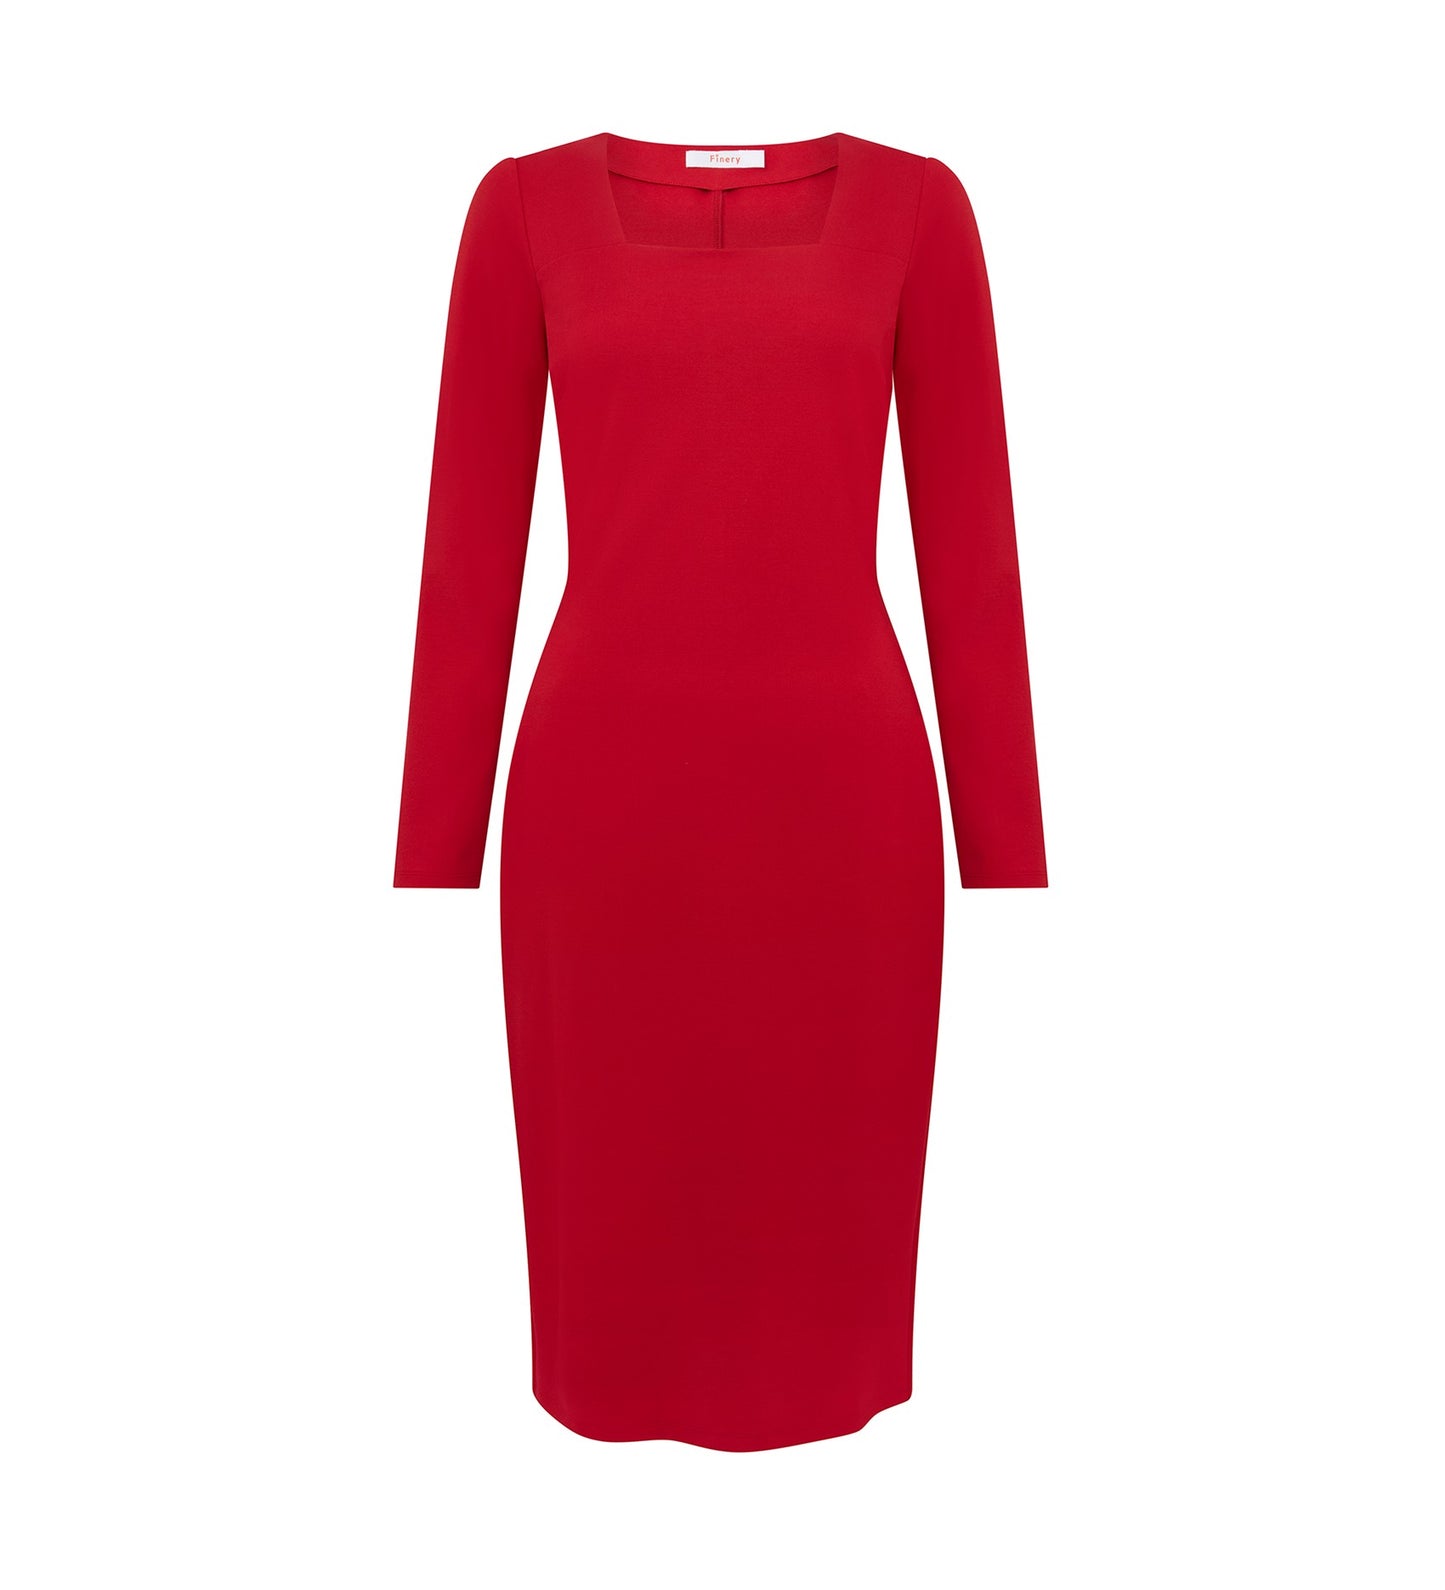 Glain Ponte Jersey Red Dress